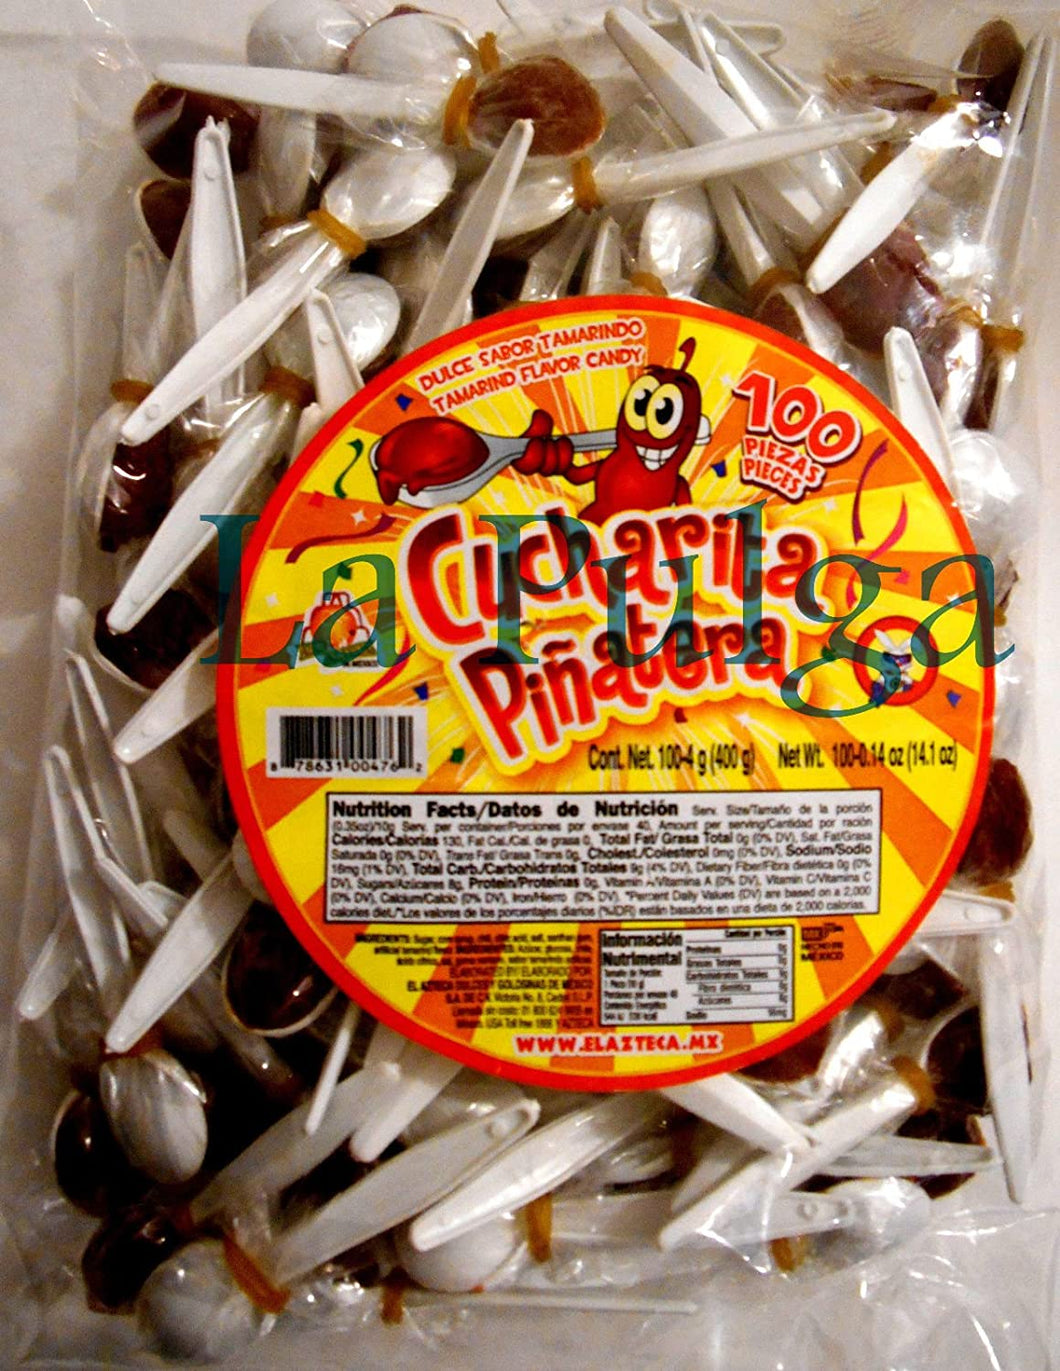 Cucharita Pinatera Tamarind Flavored Mexican Candy Spoon 100 pcs Tamarindo